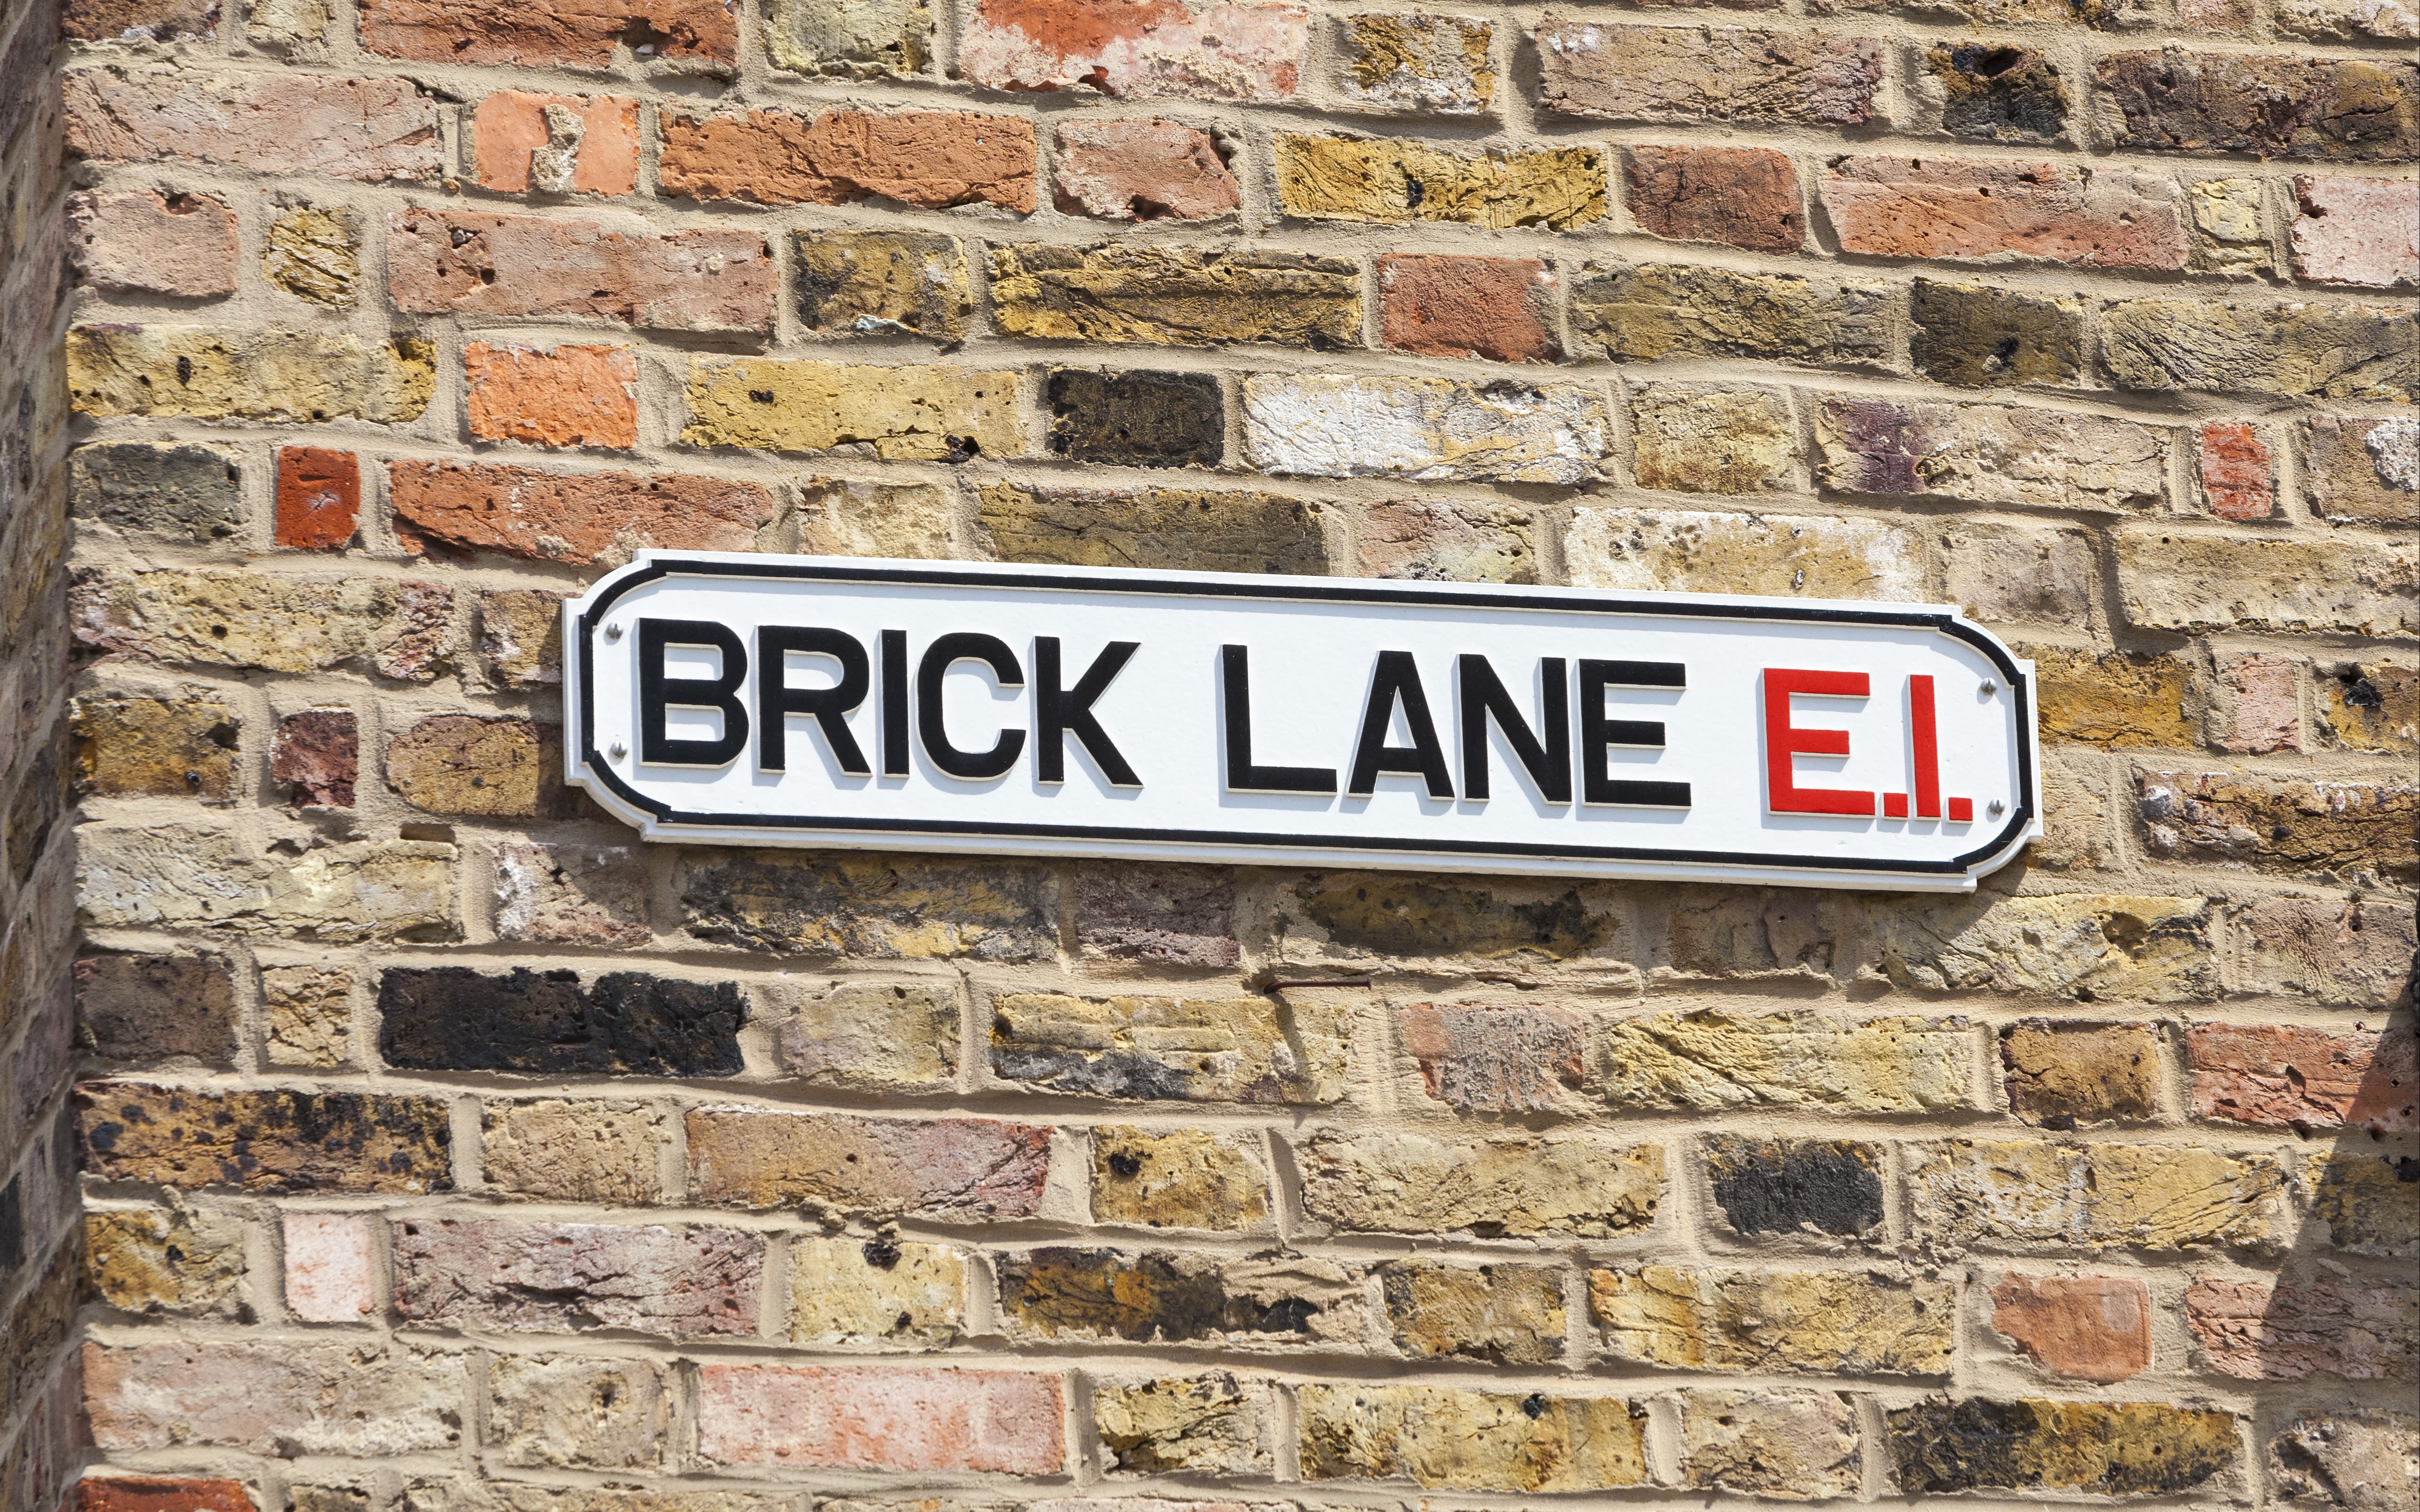 An image of a Brick Lane street sign